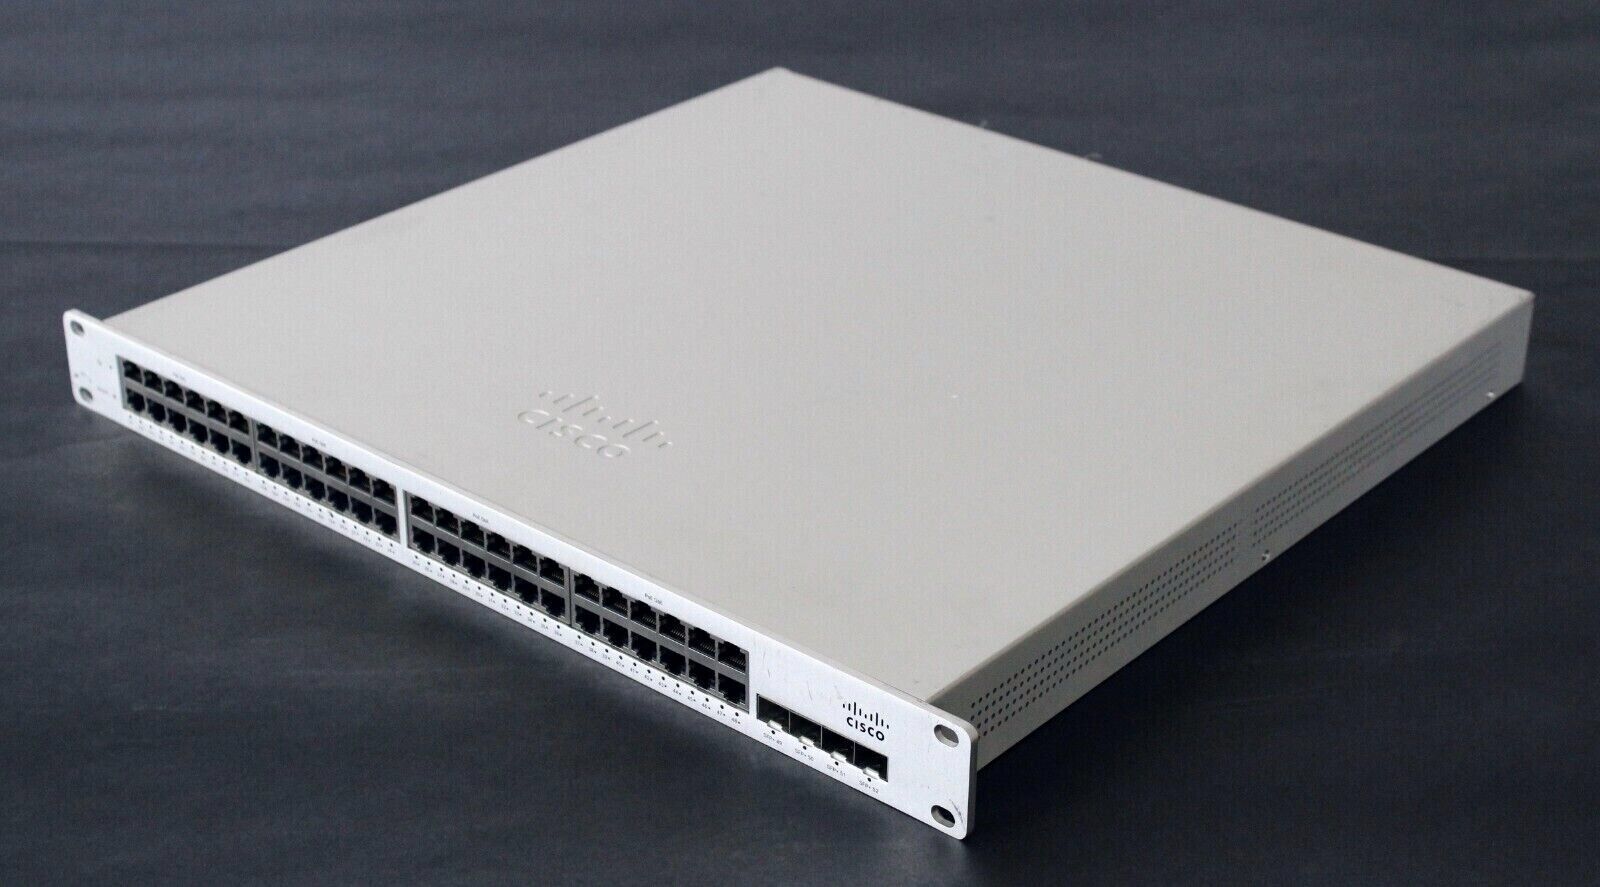 Cisco Meraki MS320-48LP-HW Cloud Managed 48 Port Giagbit PoE Ethernet